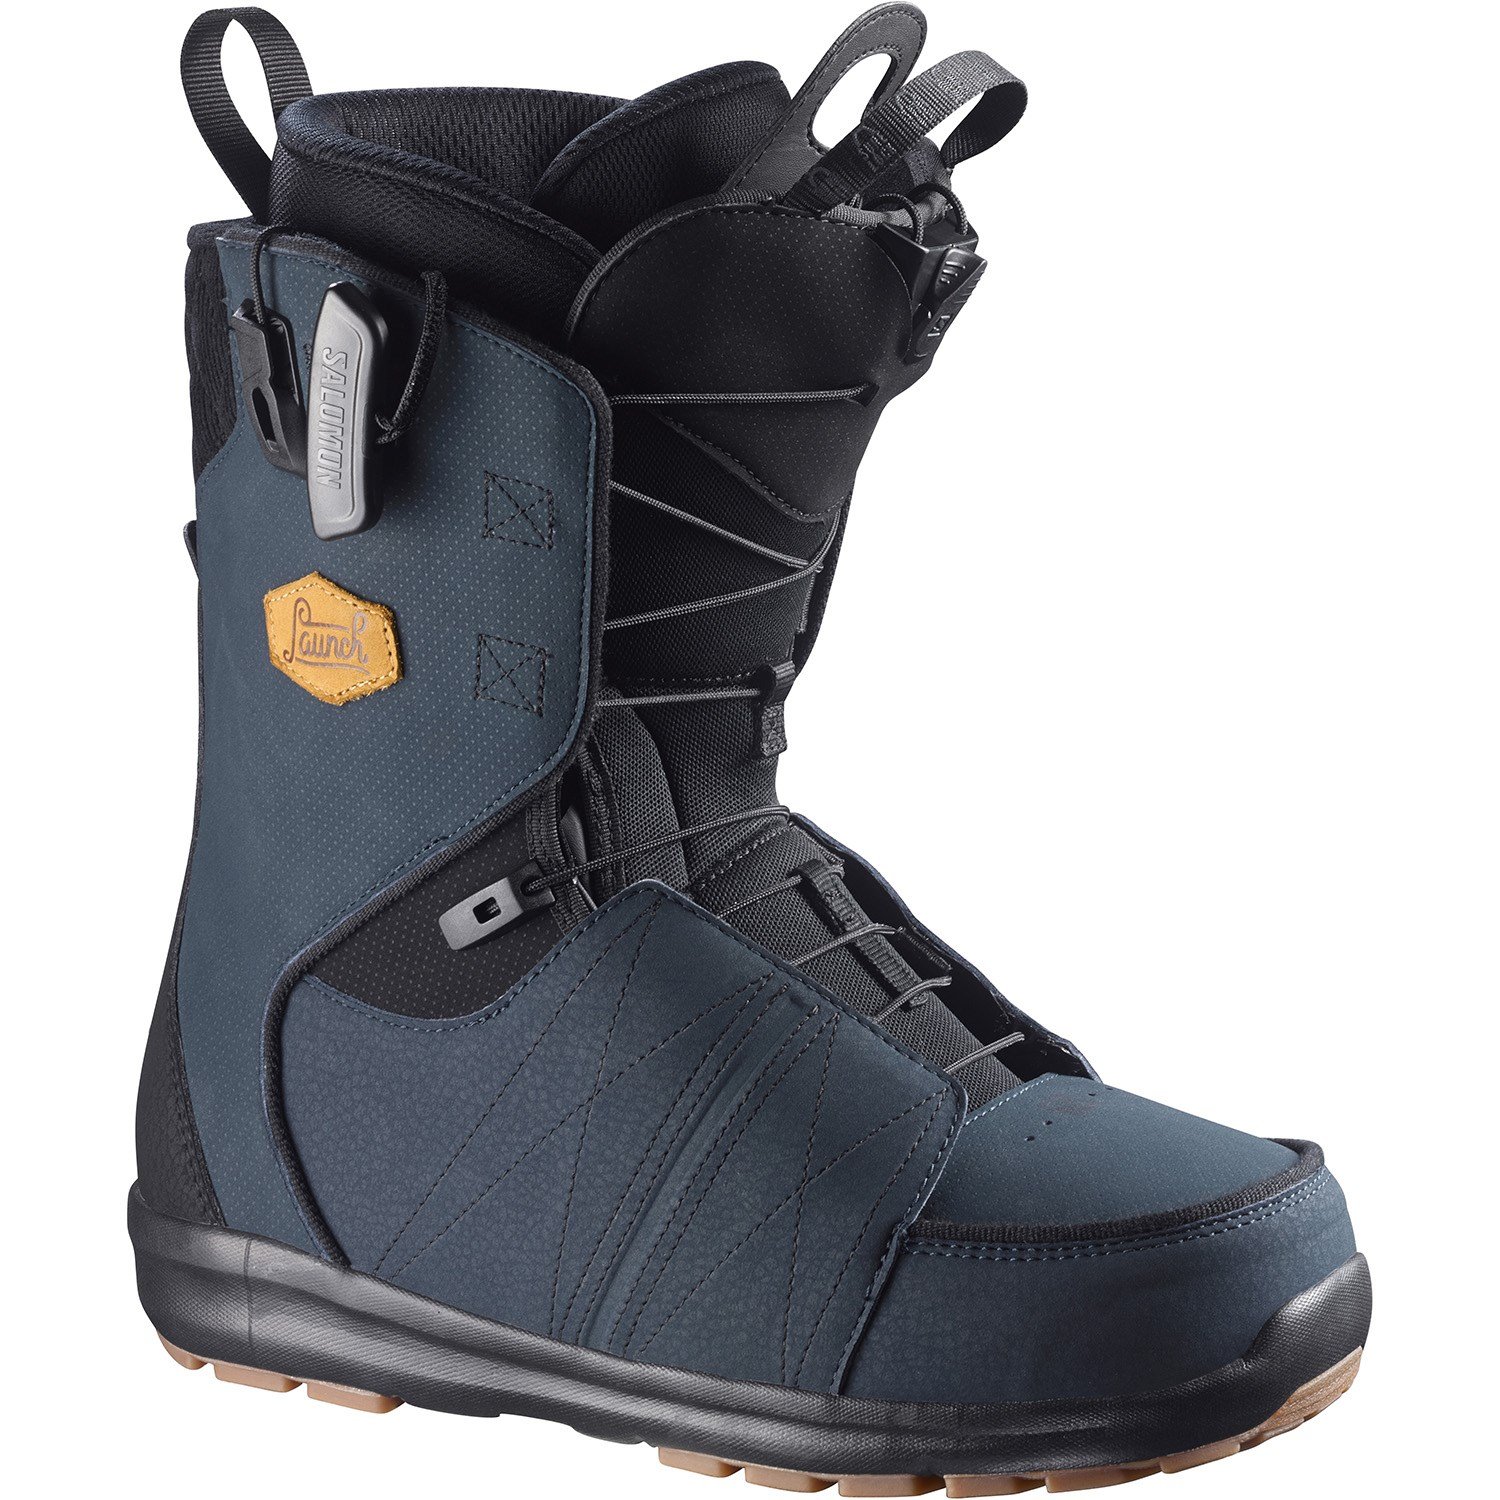 Salomon Launch Snowboard Boots 2016 | evo